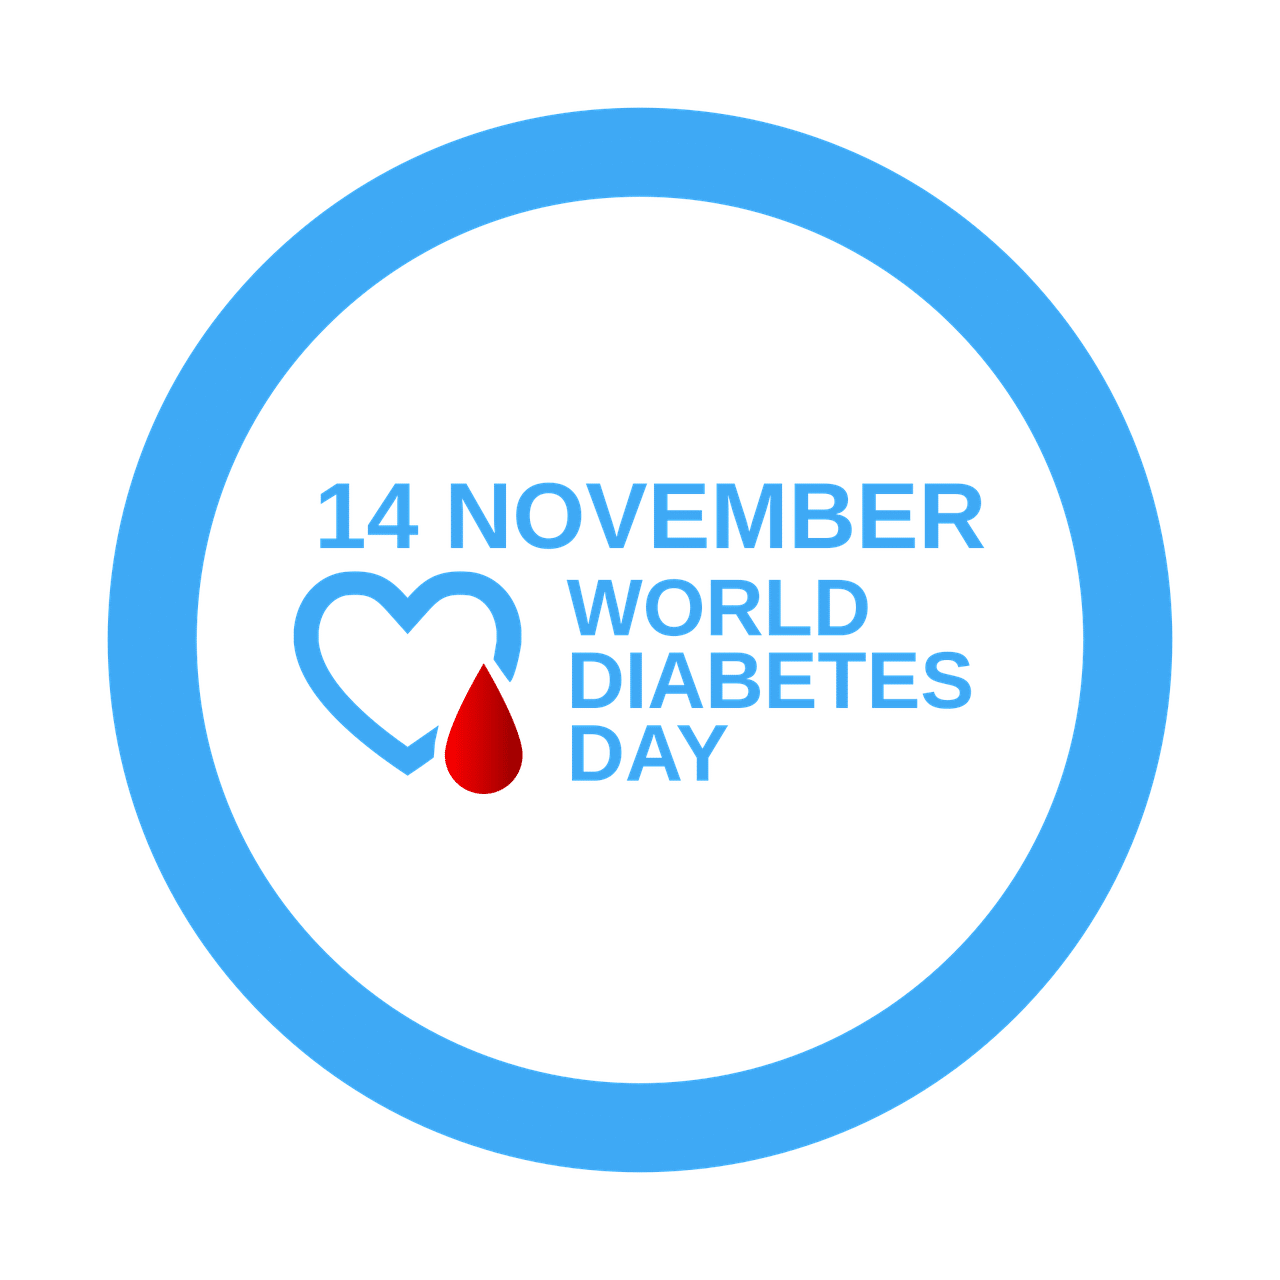 14 november world diabetes day clipart